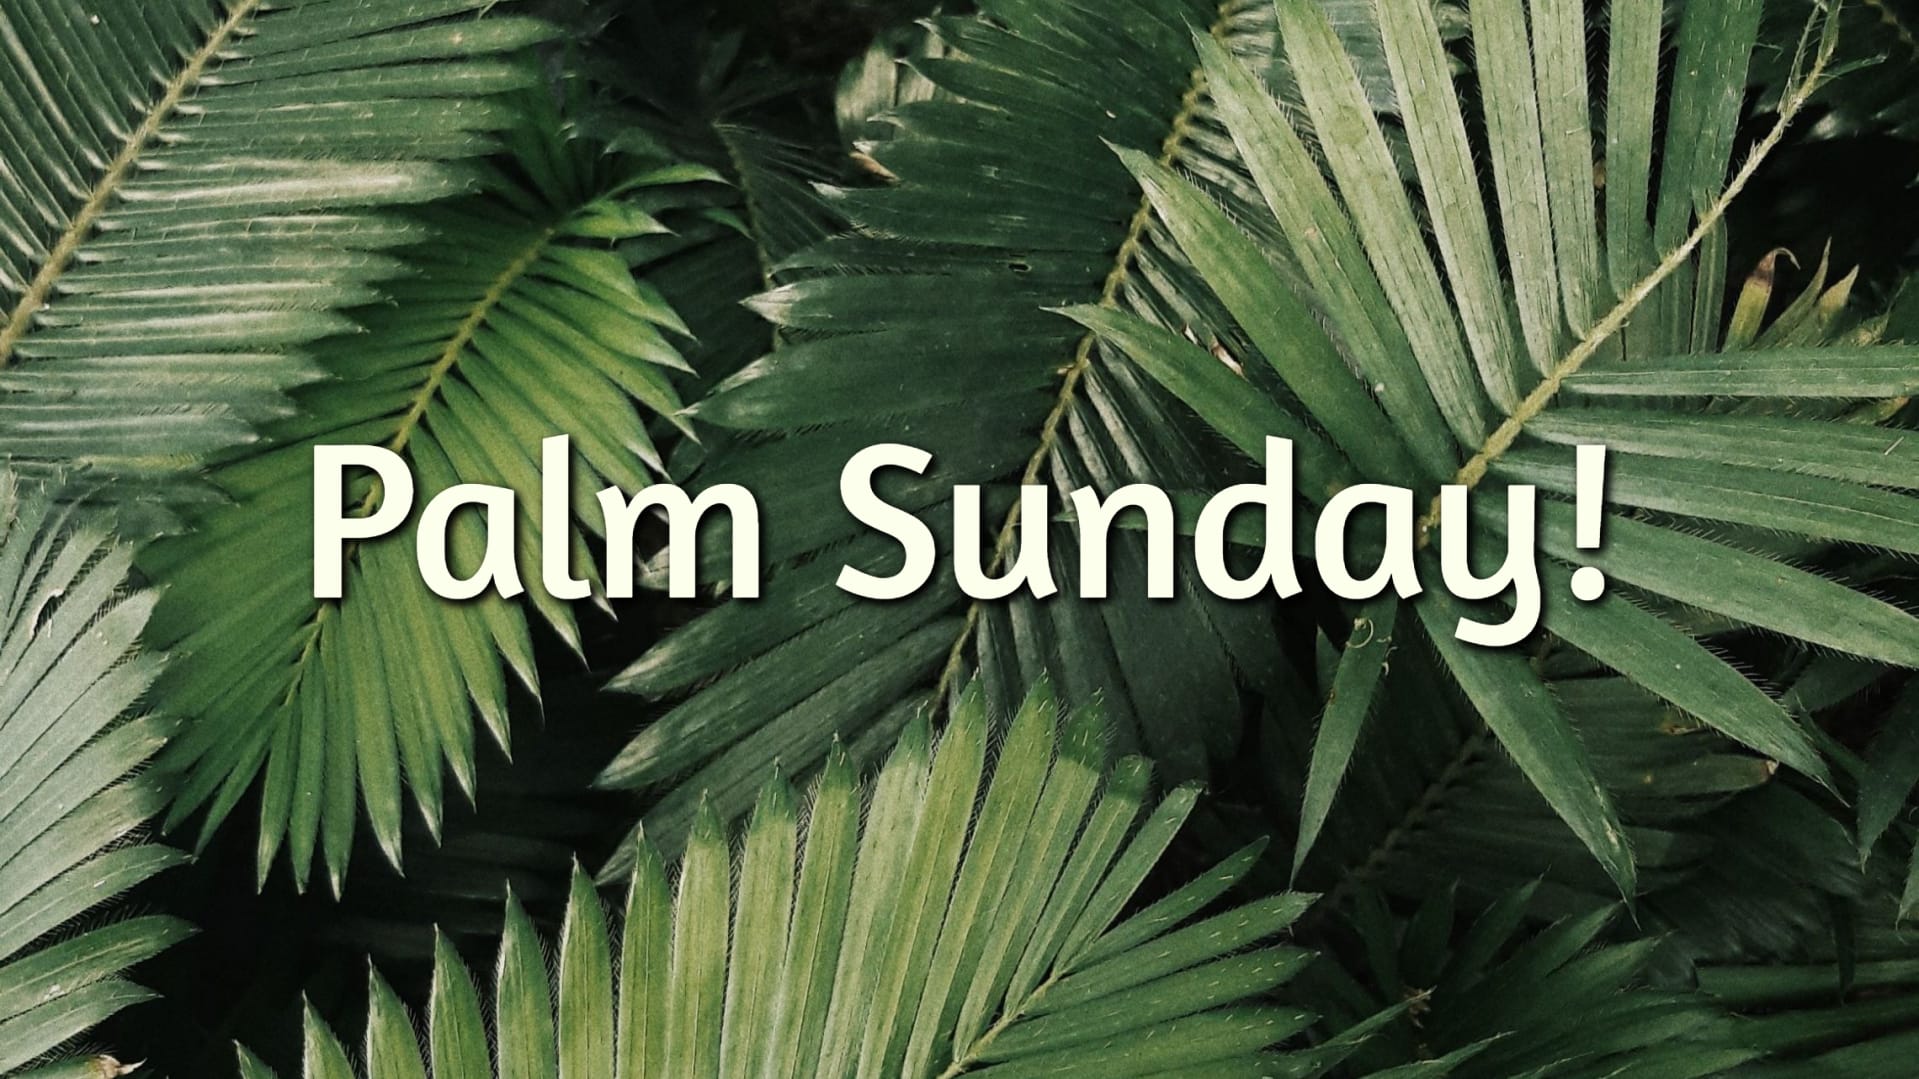 Series: <span>Palm Sunday! (Mar. 24/24)</span>